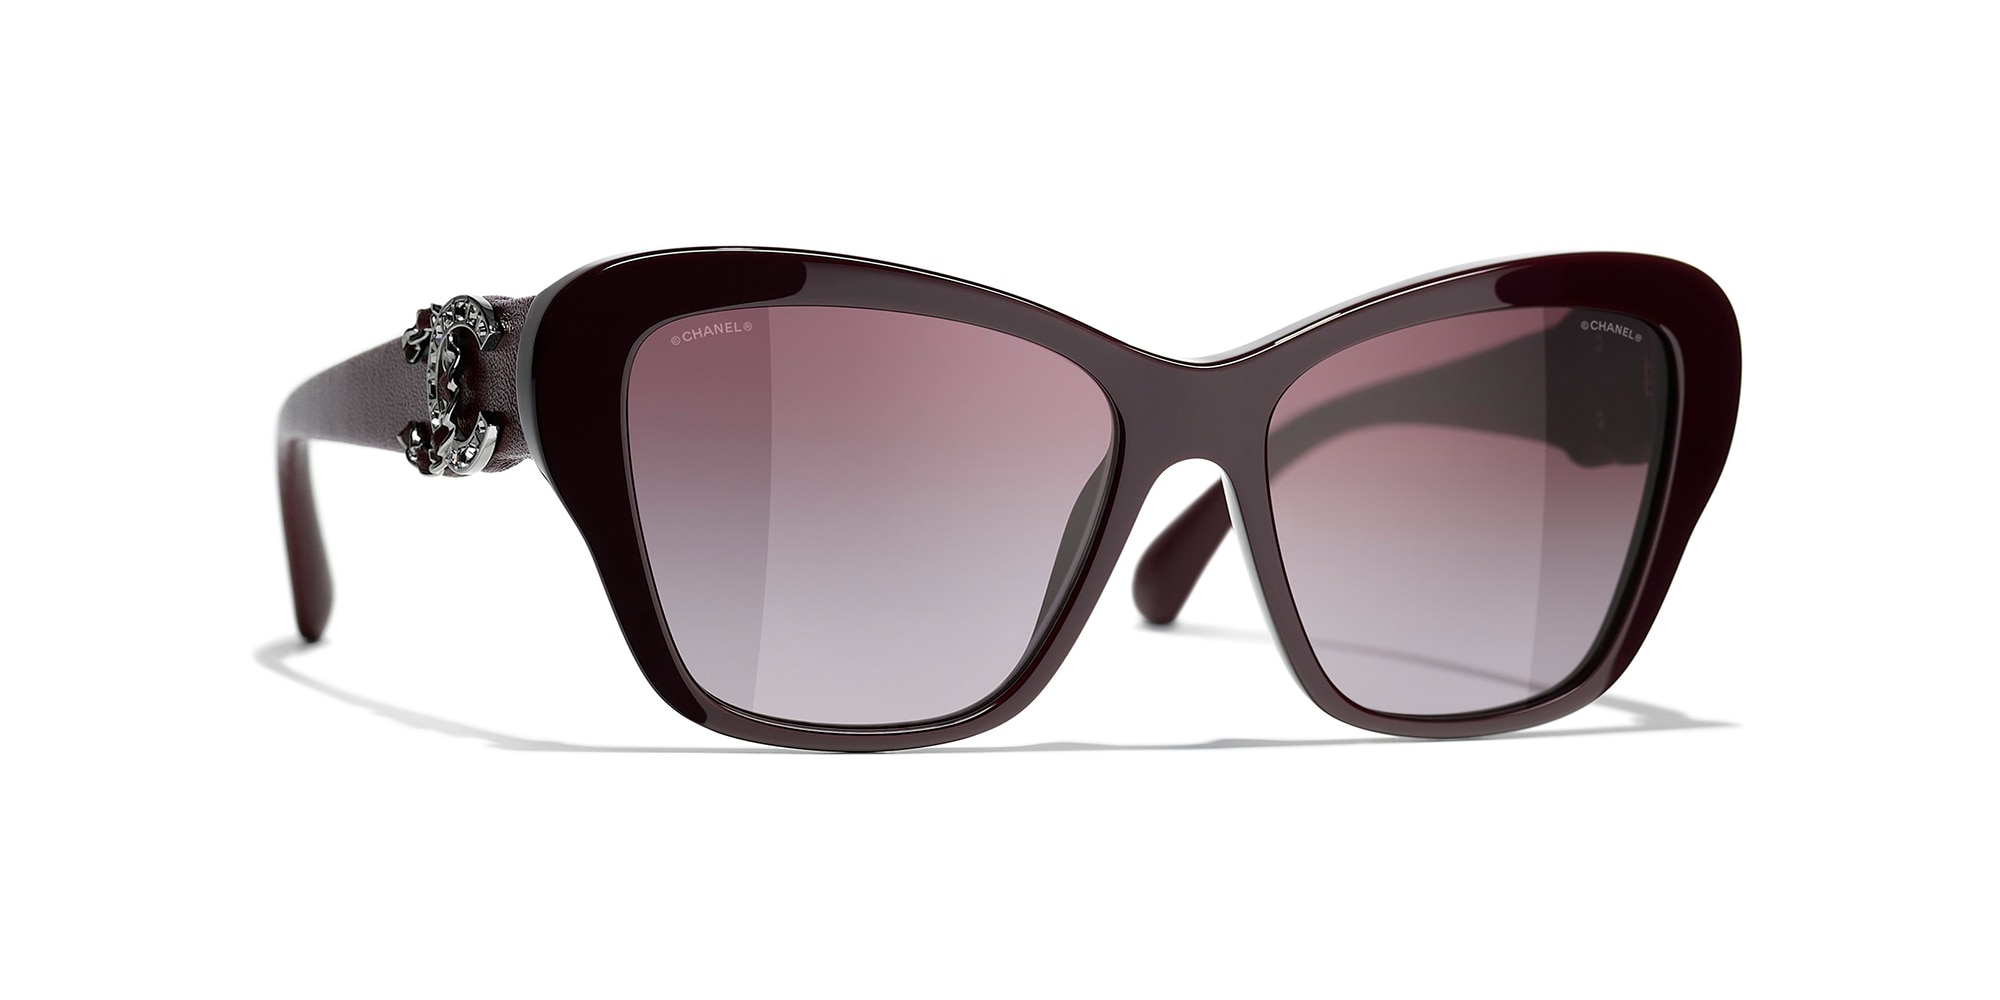 Sunglasses Shield Sunglasses acetate  strass  Fashion  CHANEL